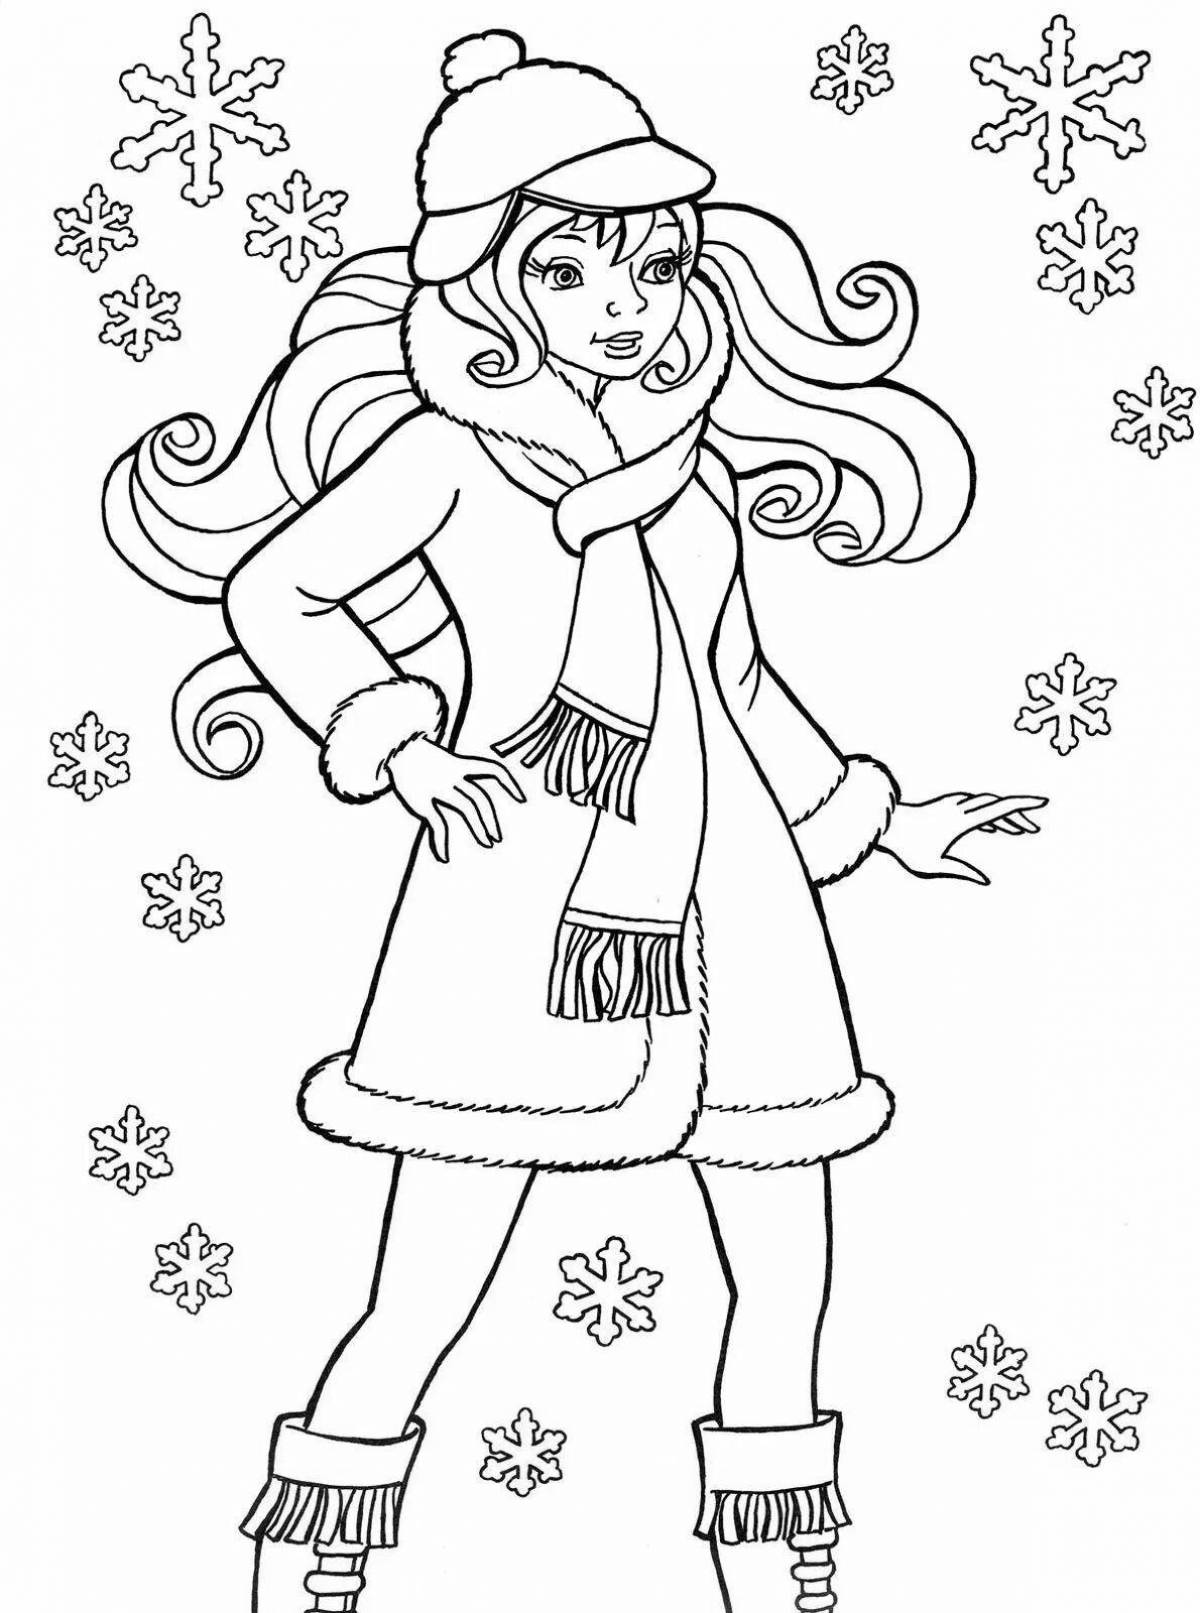 Serendipitous coloring girl in a fur coat